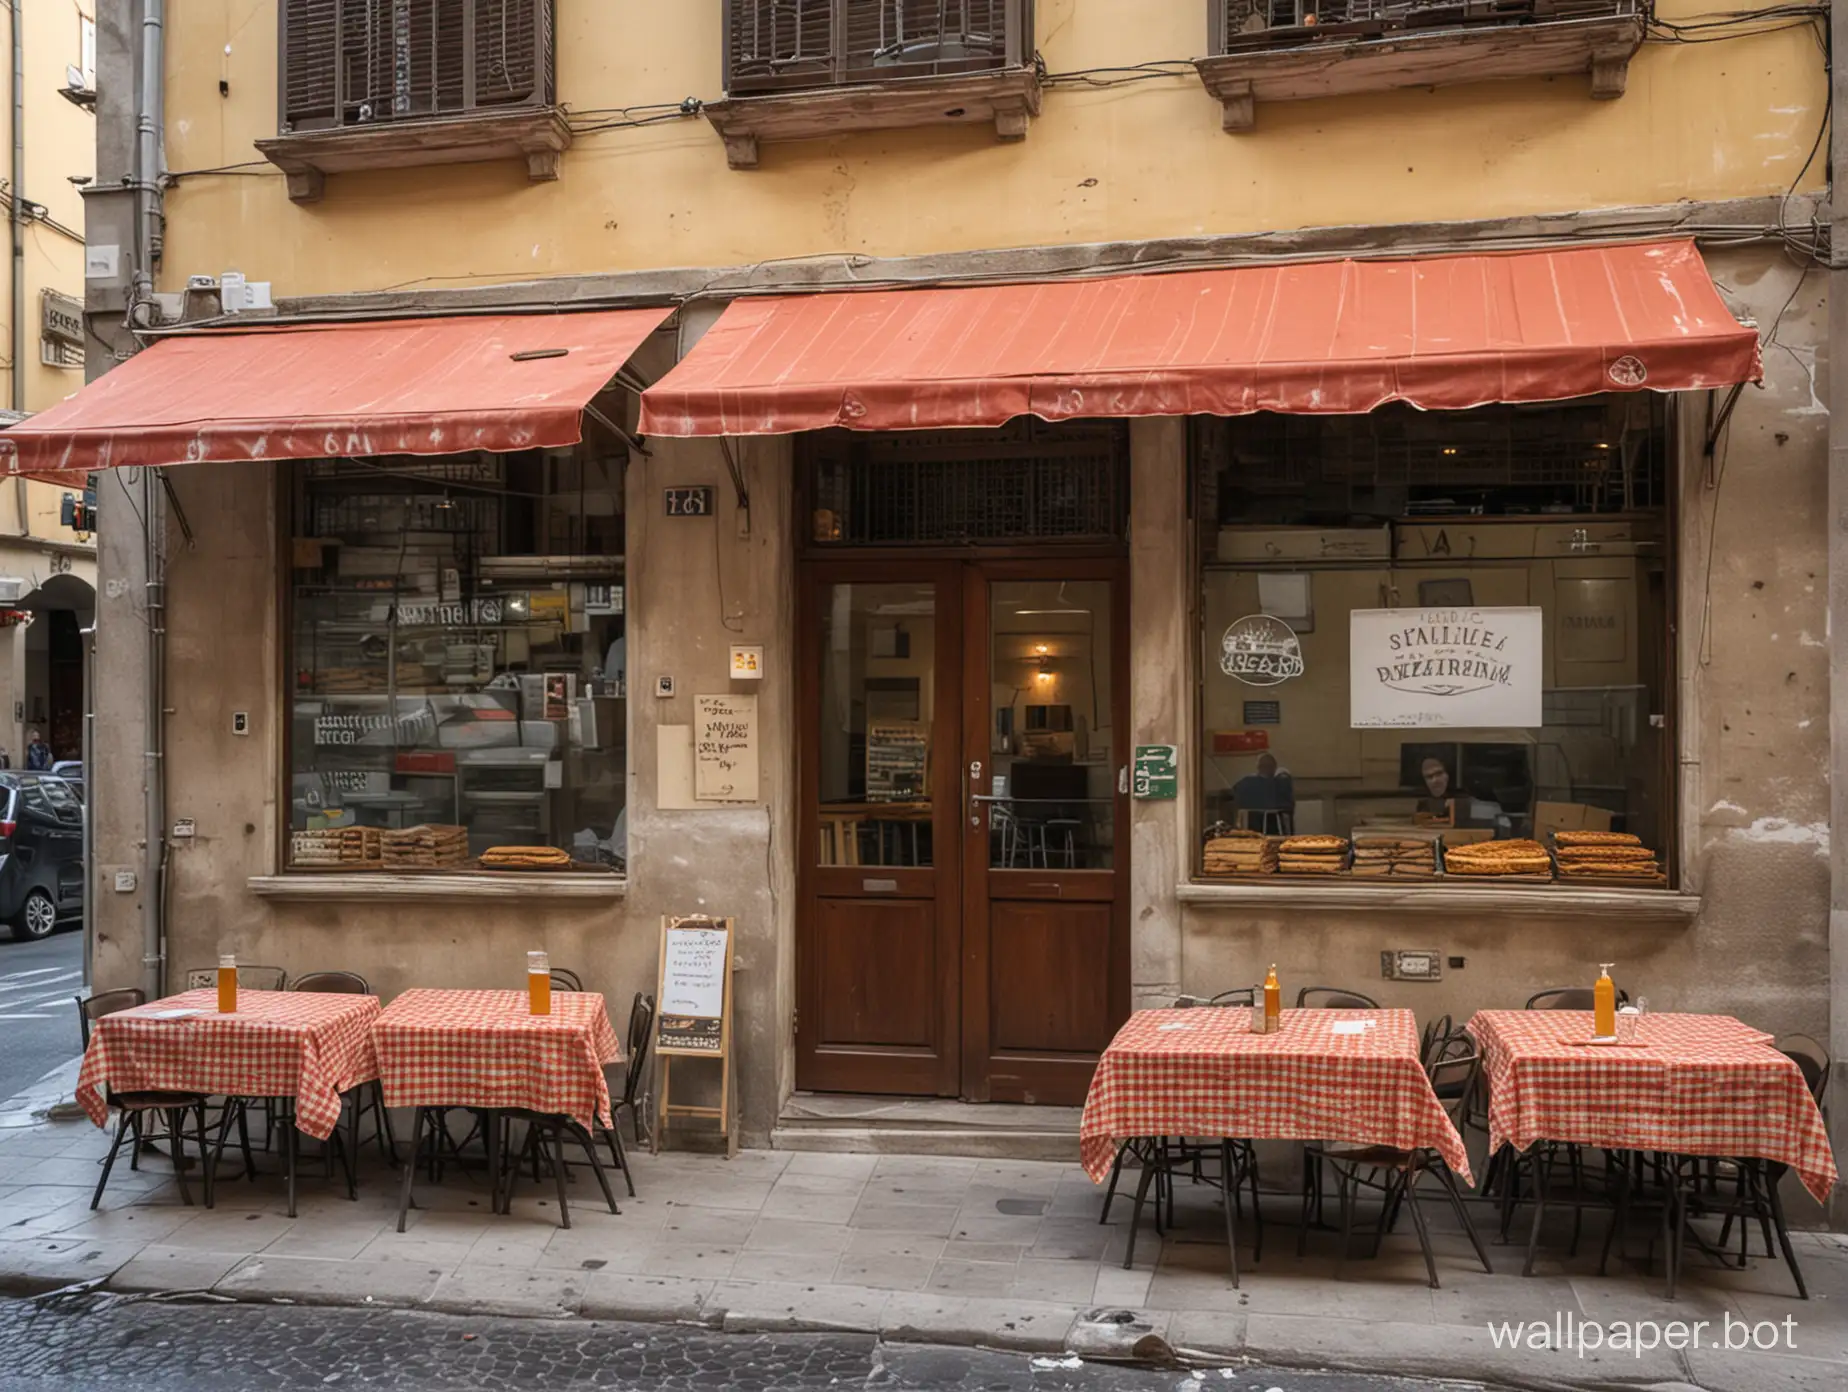 Italian pizza restaurant in Naples, Italy.